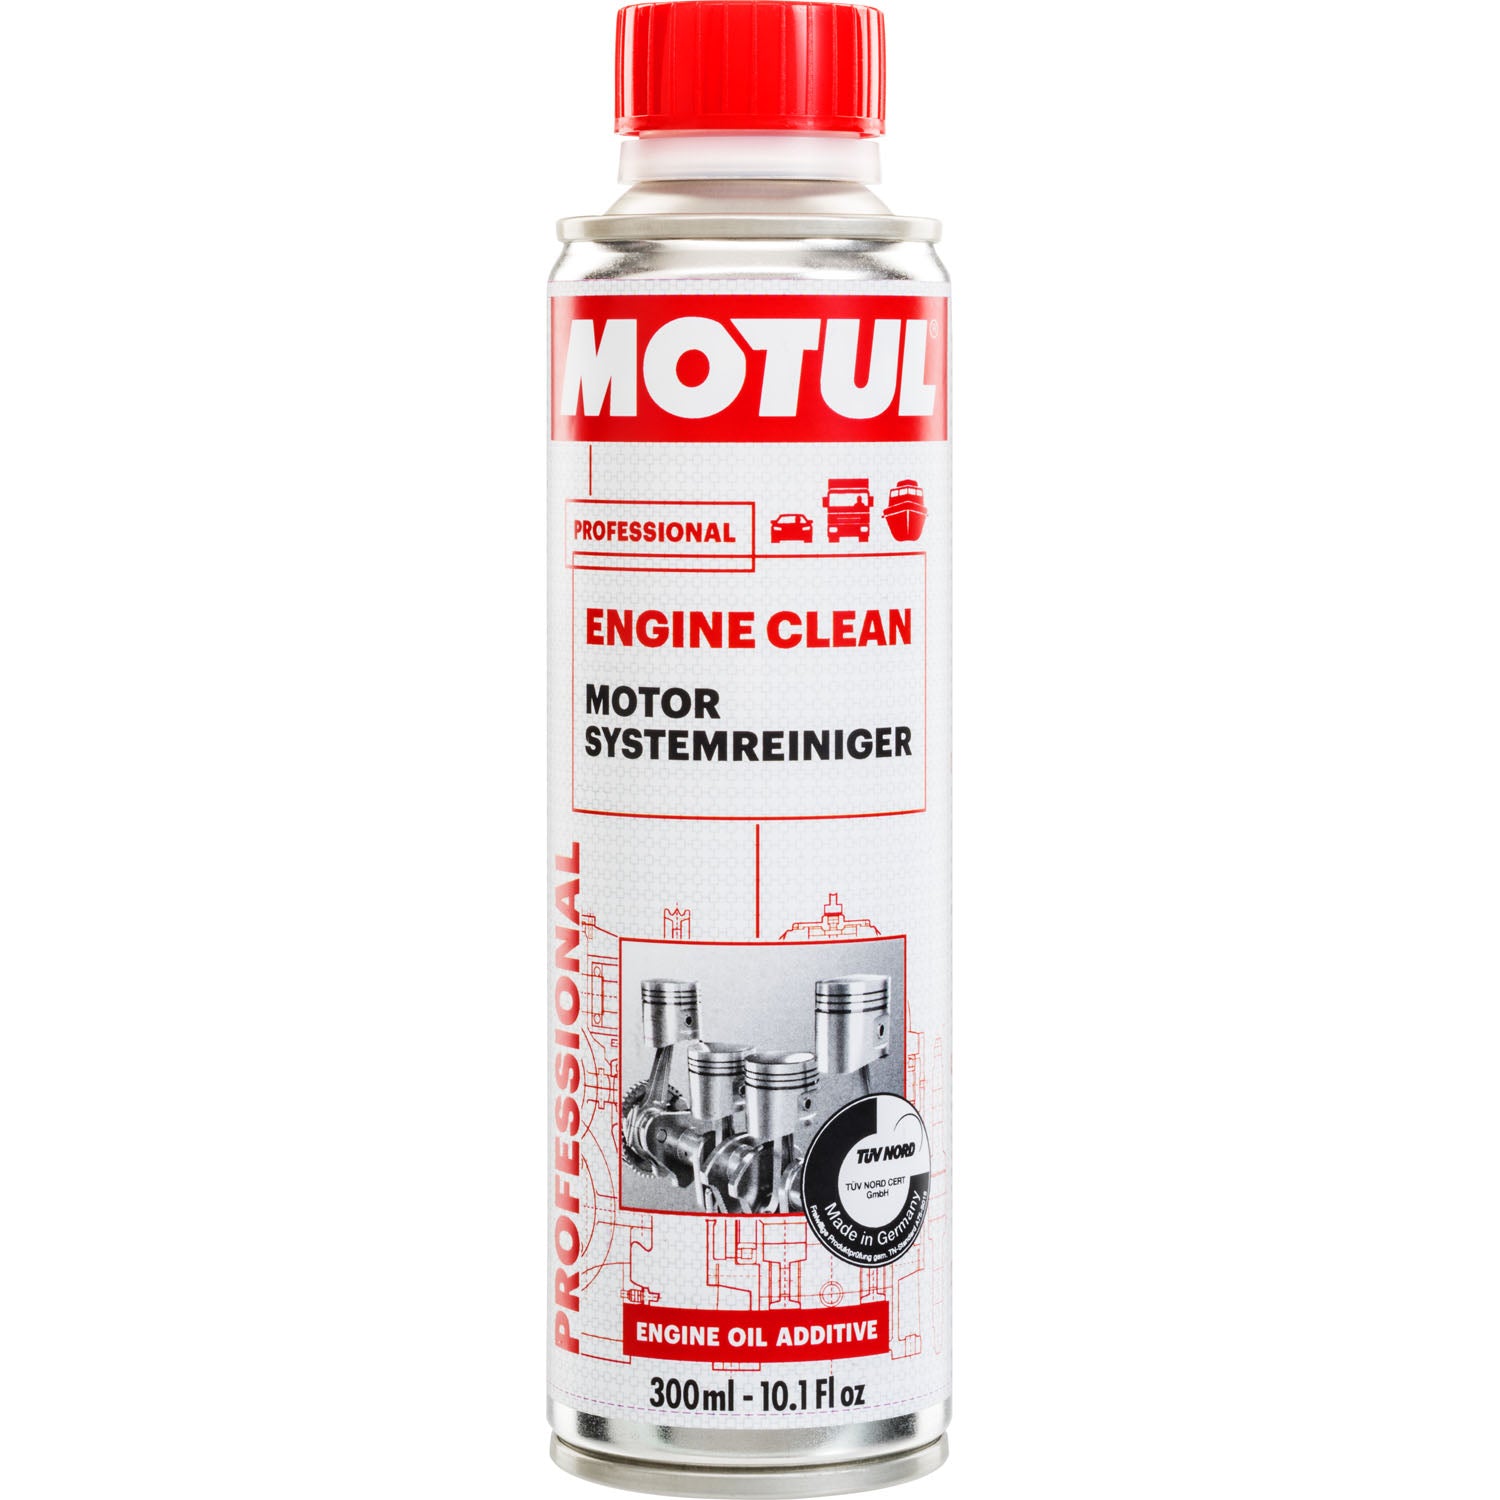 Motul Professional Engine Clean Oil Additive - 300ml